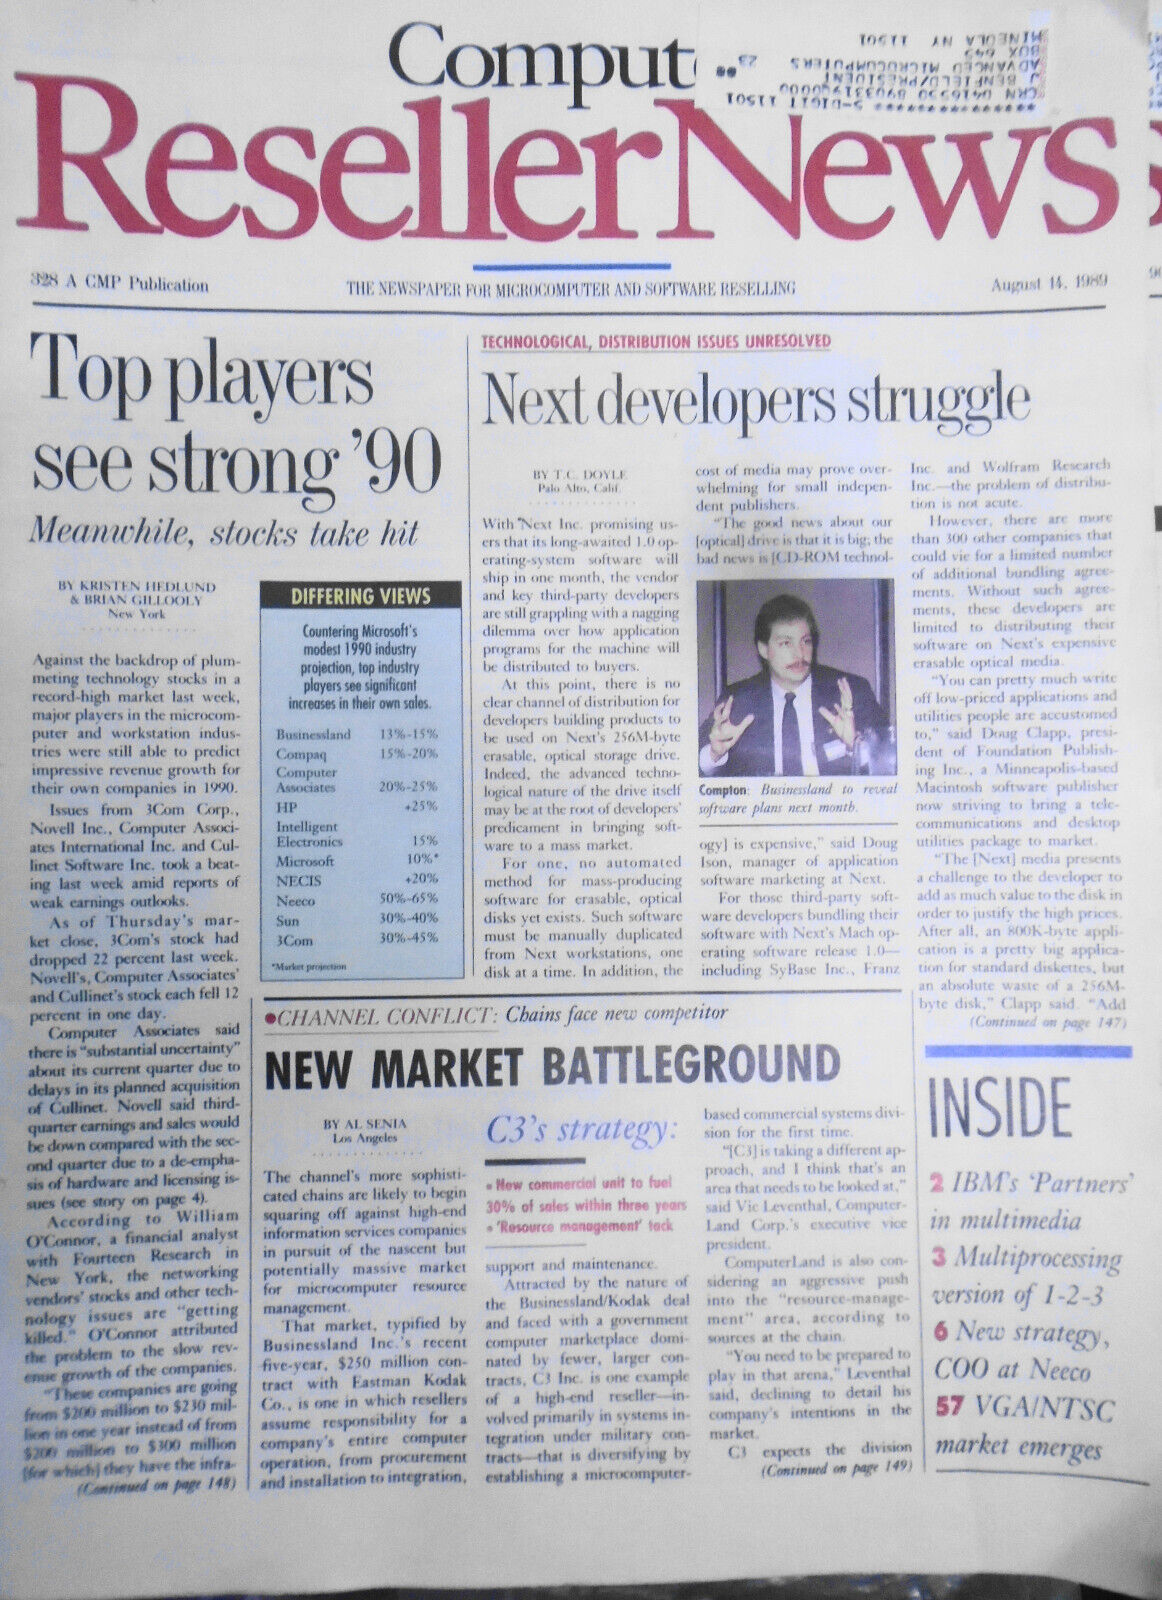 Computer Reseller News, August 14, 1989 - NeXT software developers struggle